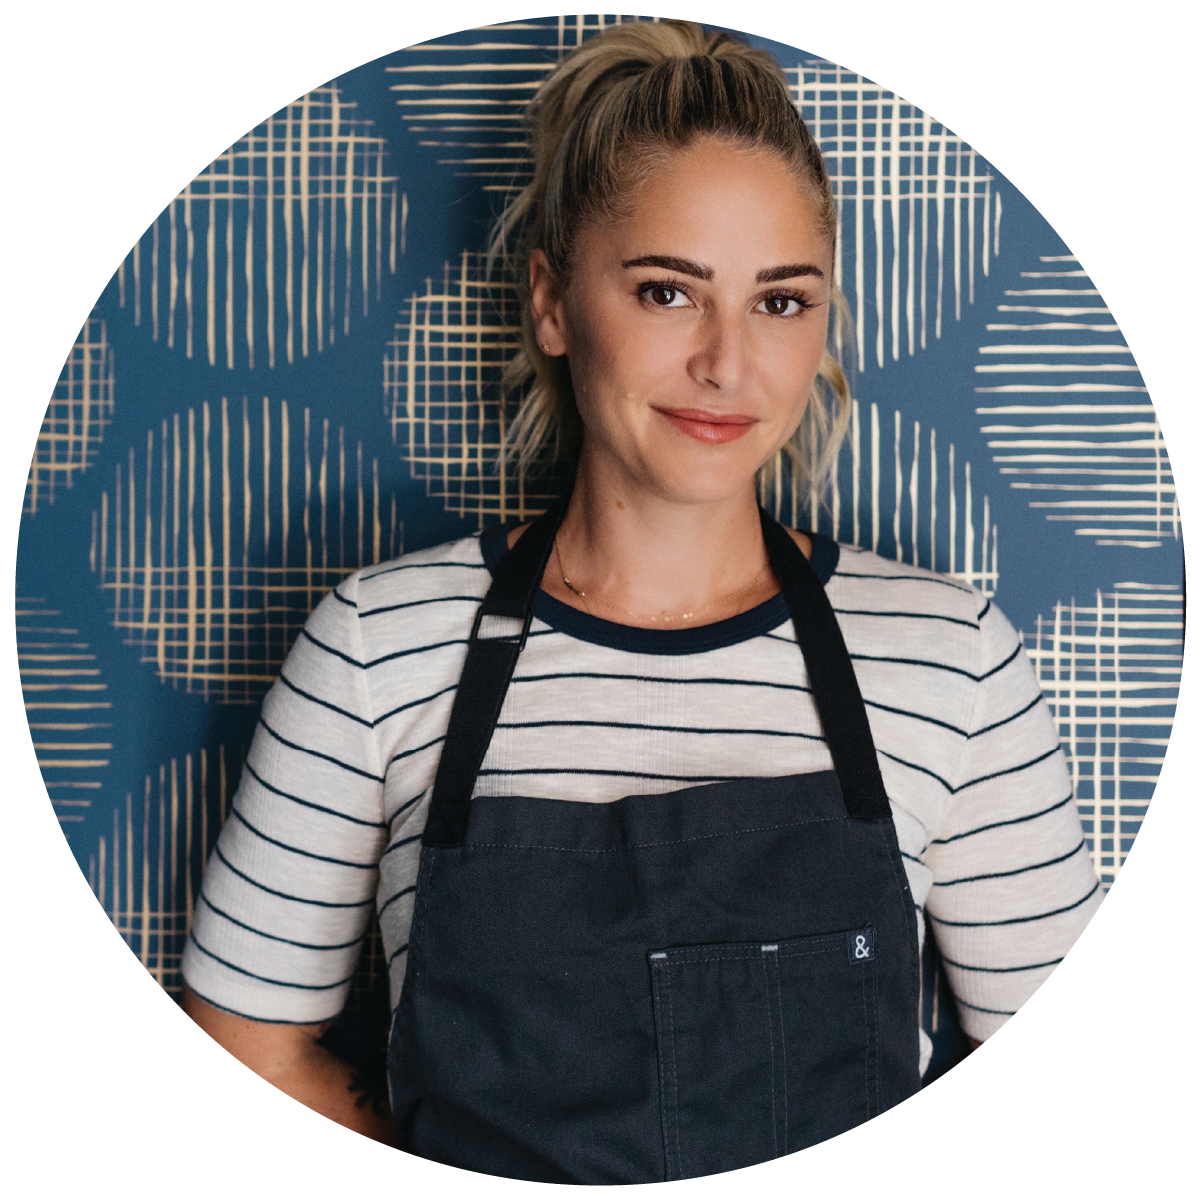 Bravo's Top Chef Season 14 winner Brooke Williamson